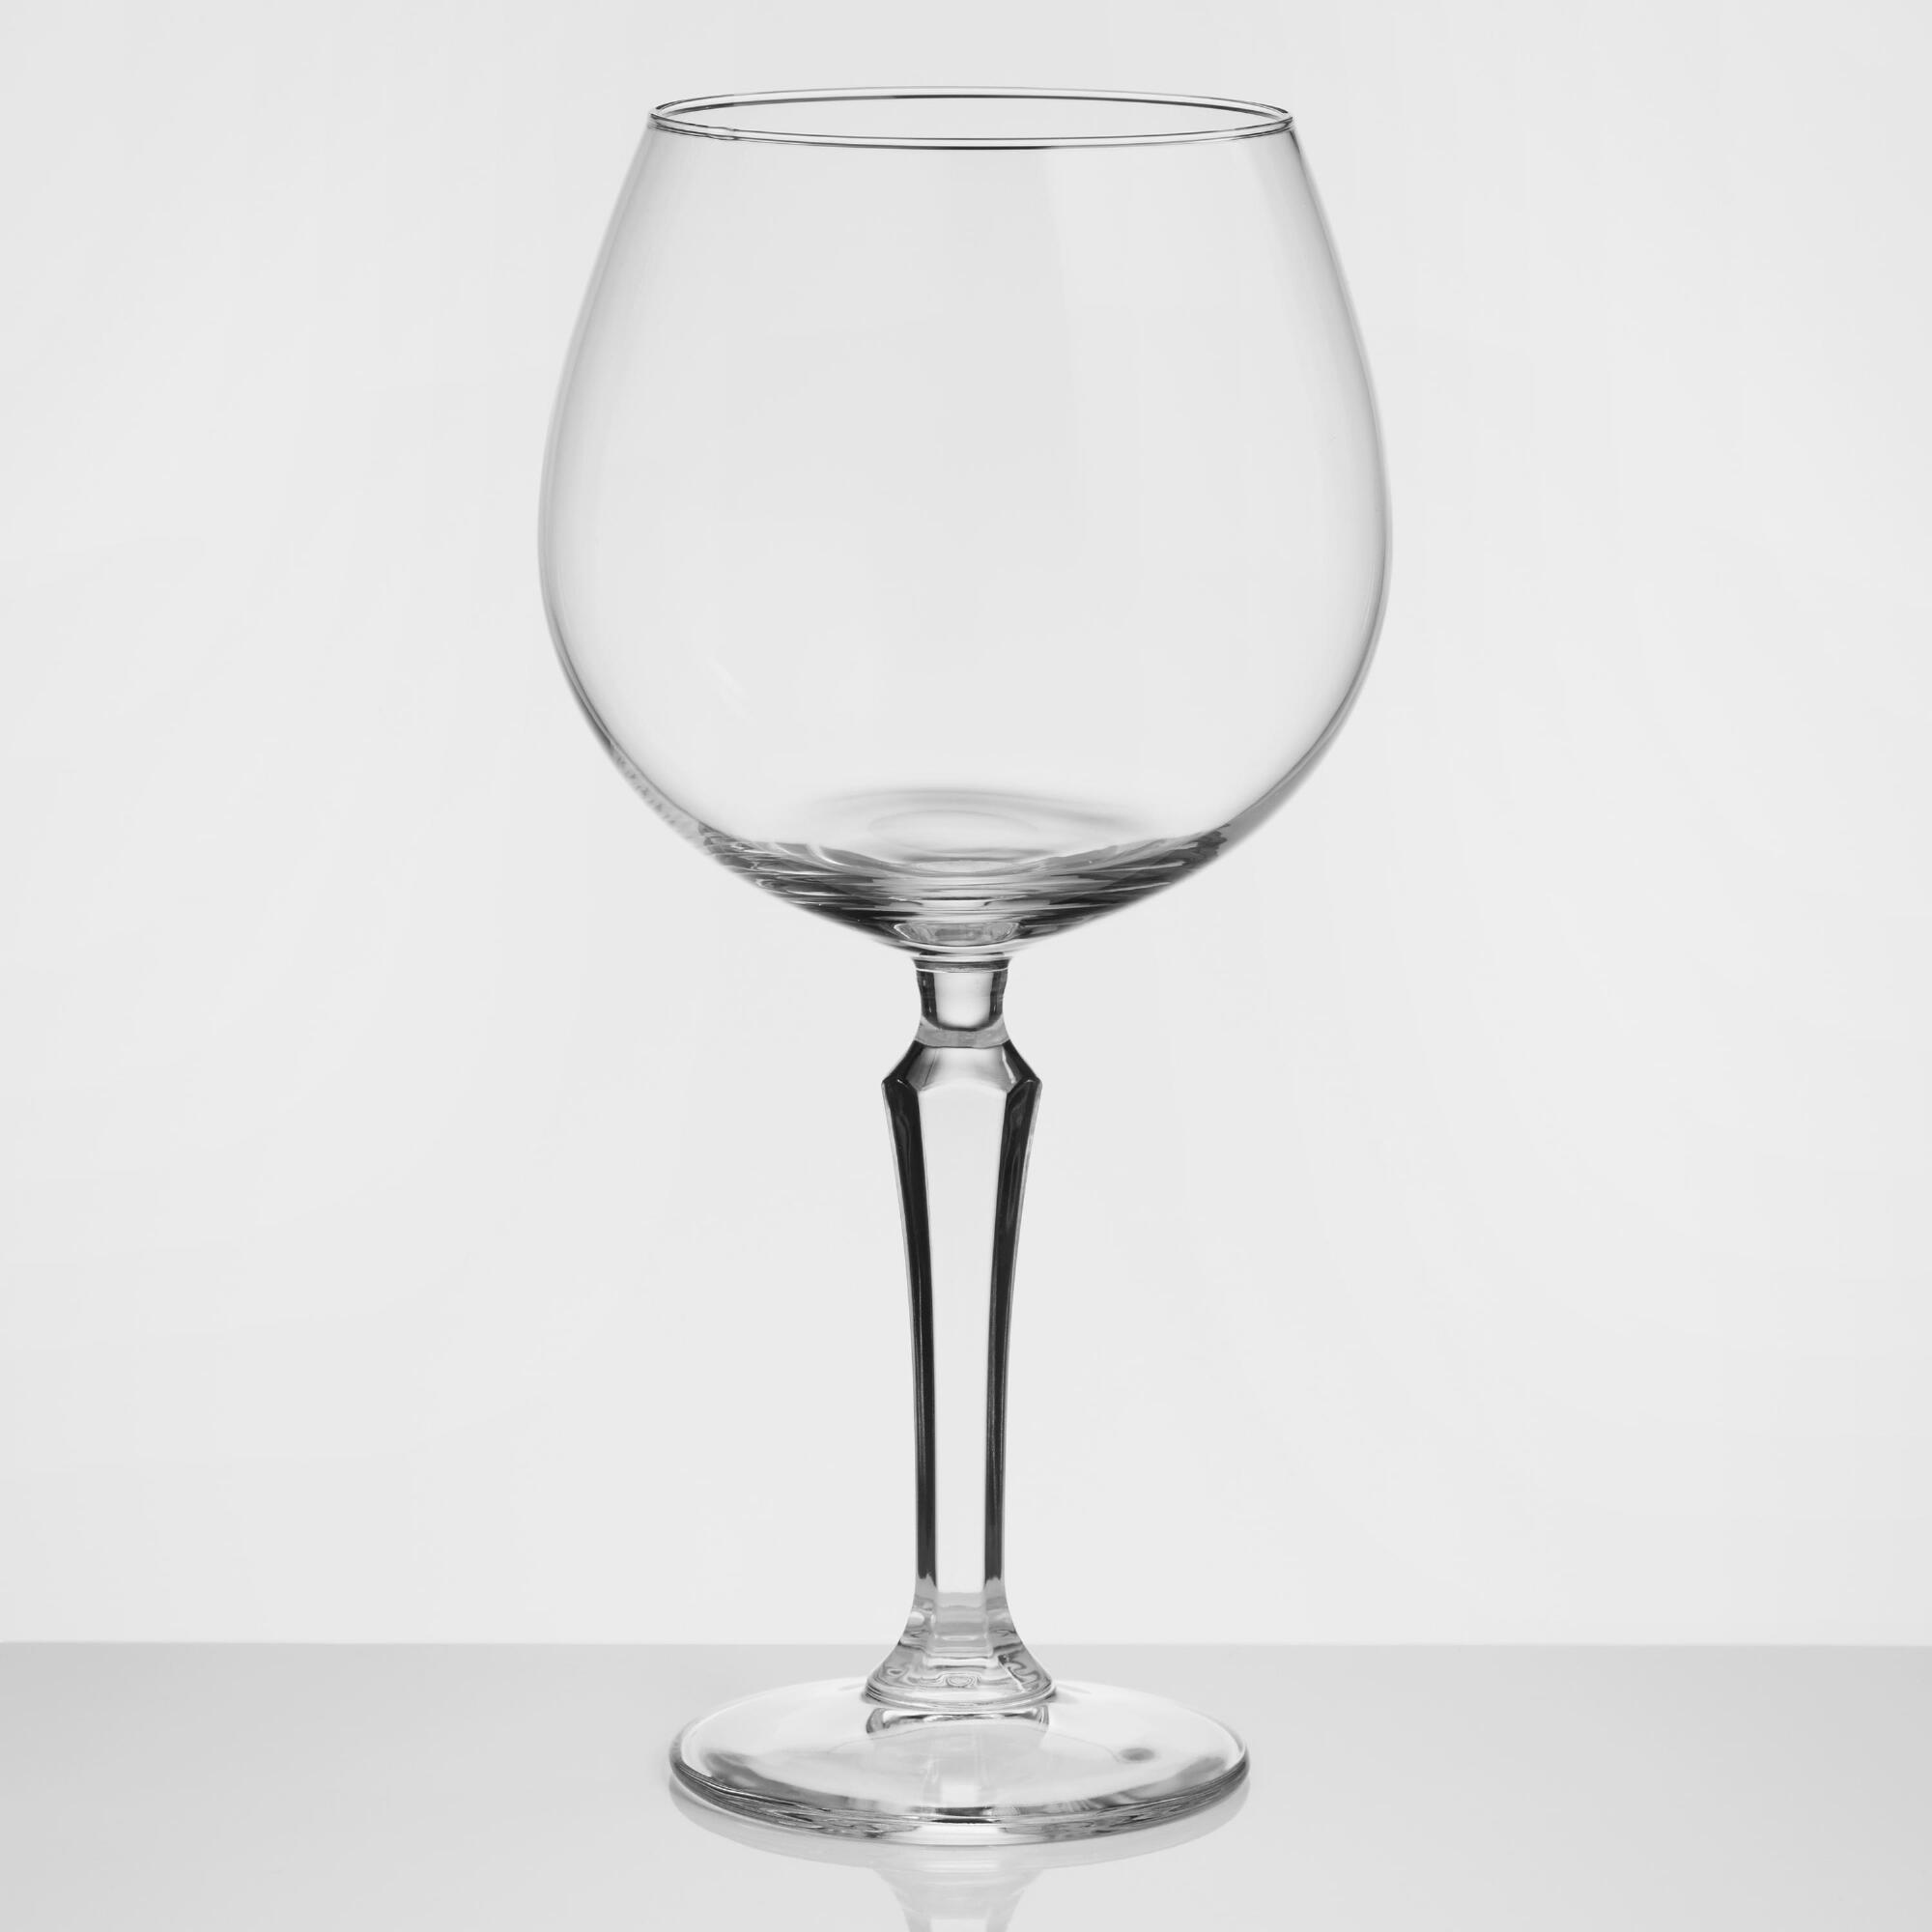 Speakeasy Classic Wine Glasses Set of 4 by World Market